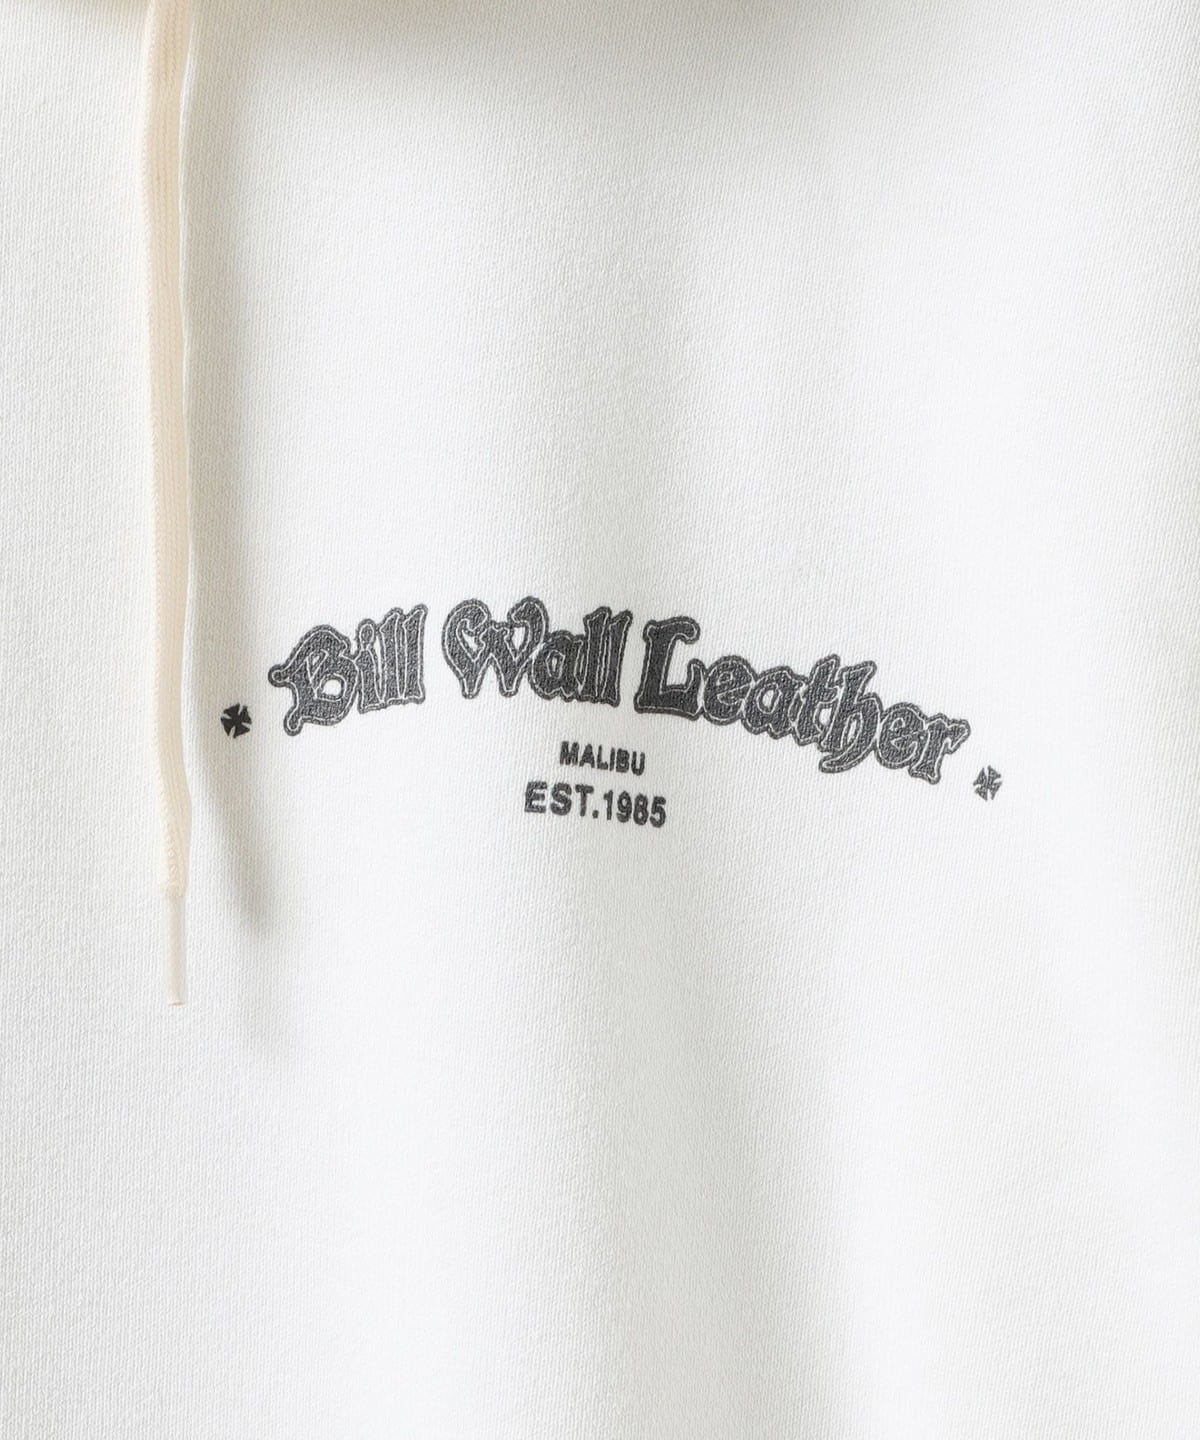 Bill Wall Leather（ビルウォールレザー）Bill Wall Leather / 別注